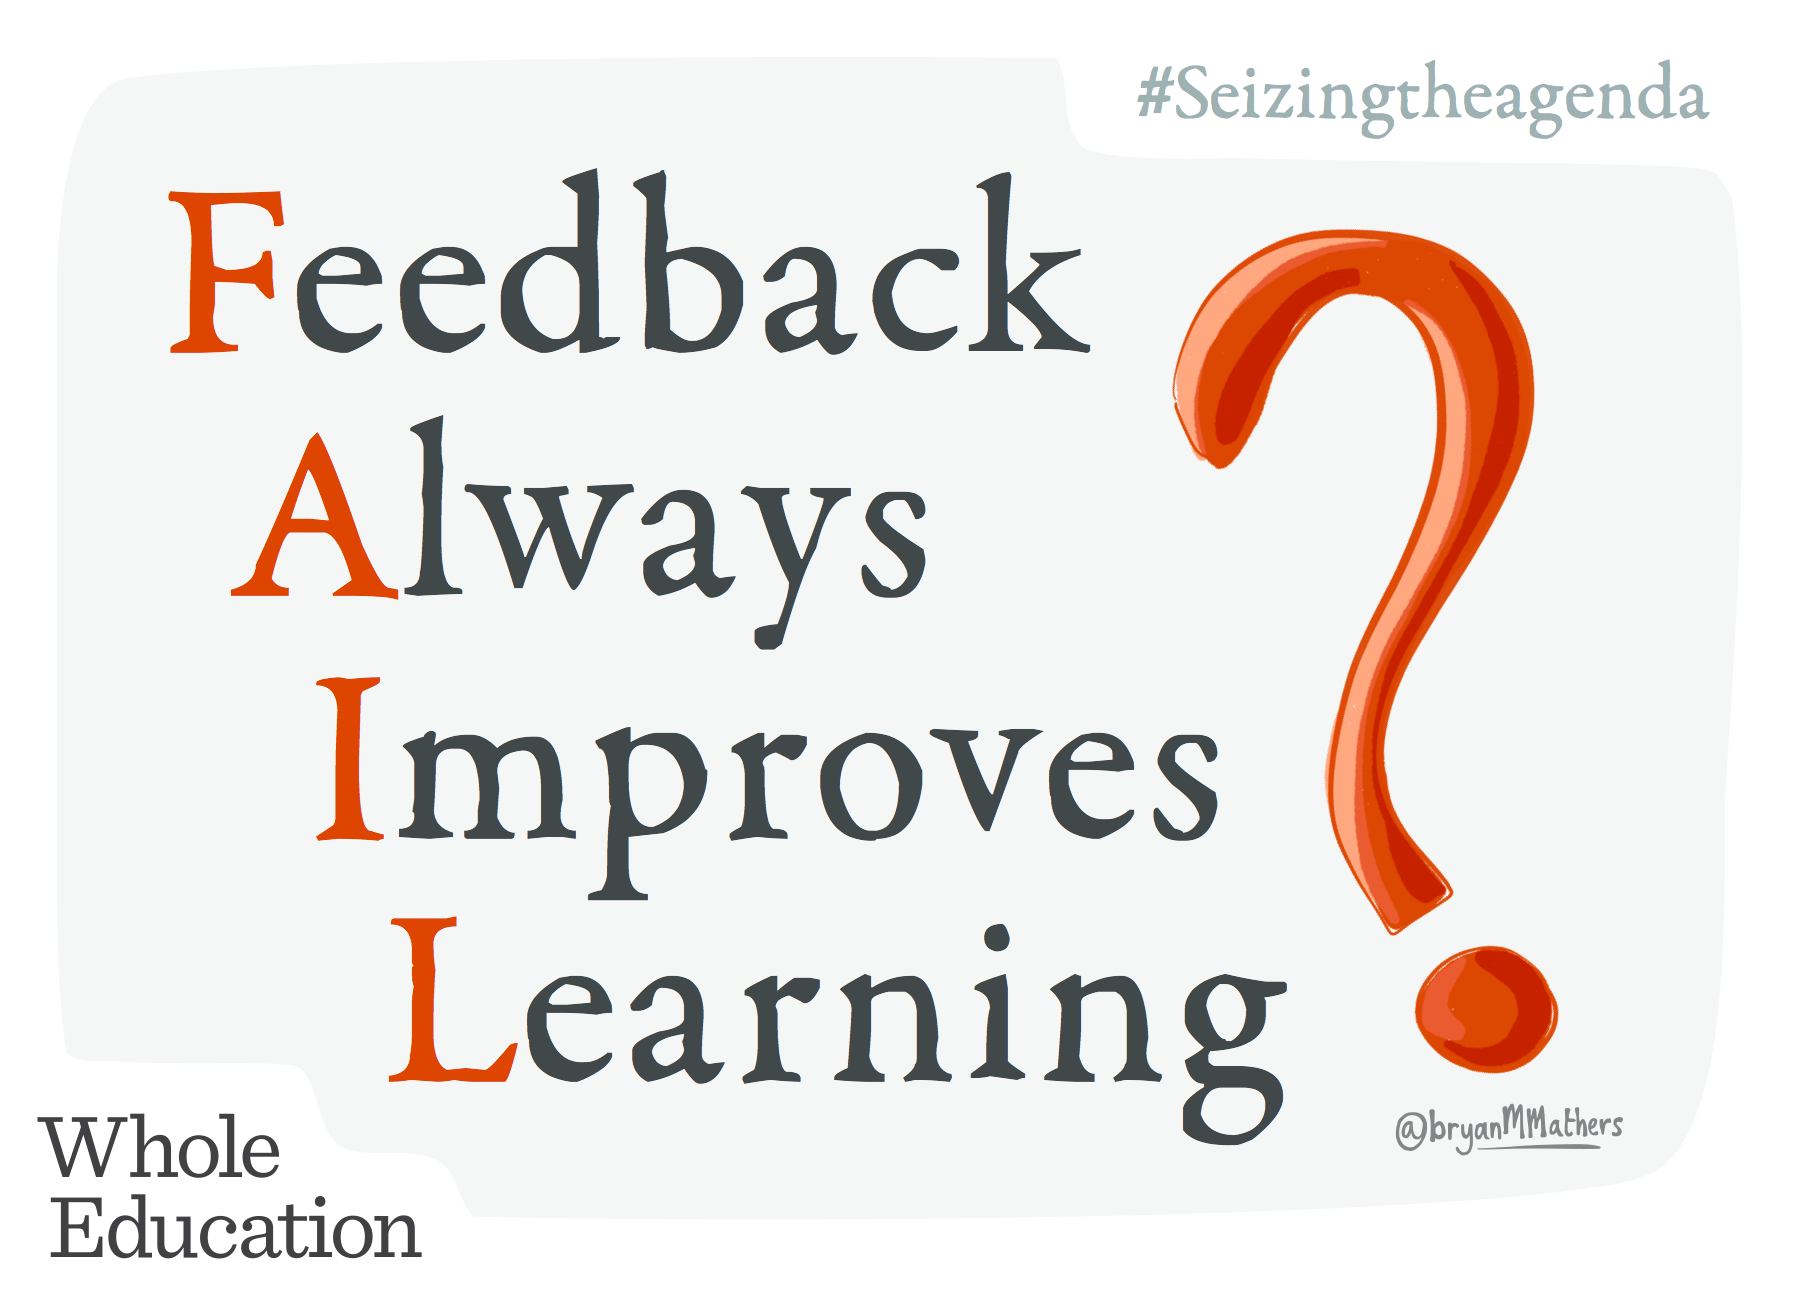 Feedback always improves learning?